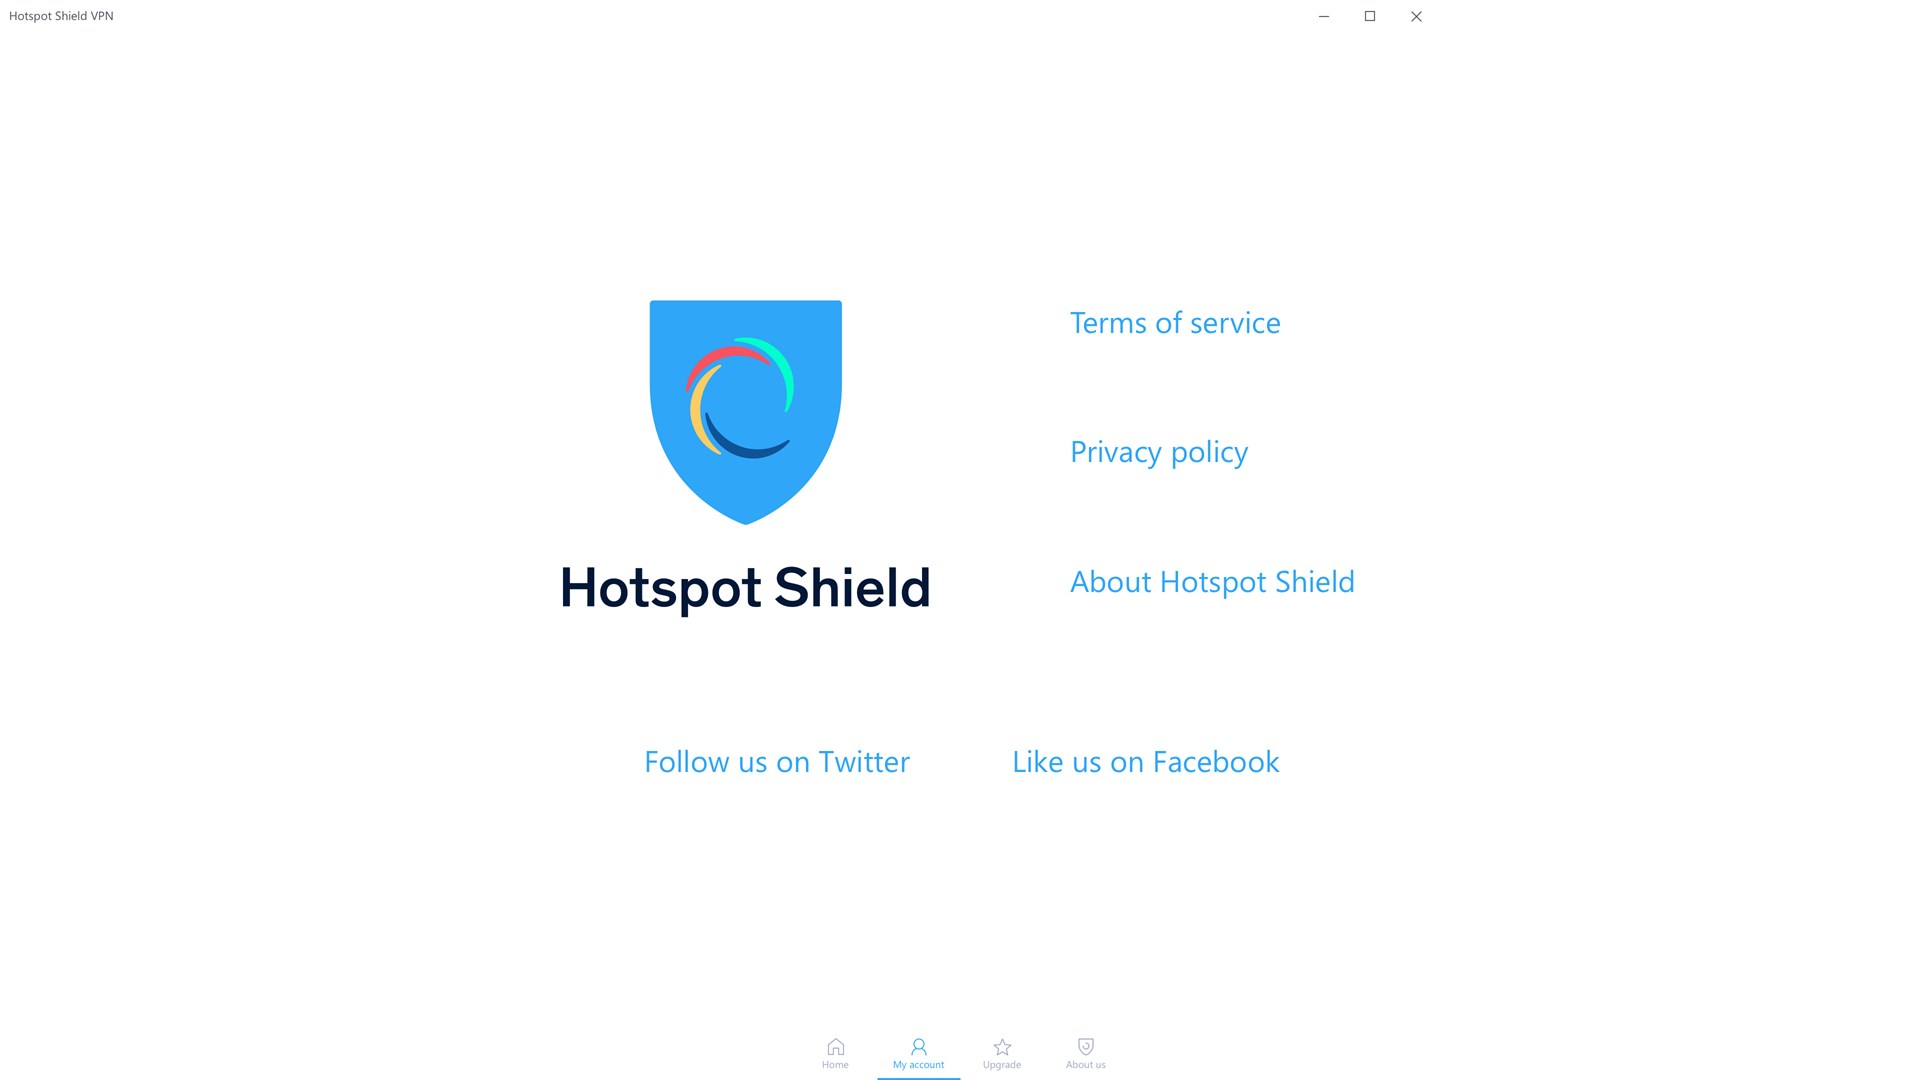 Hotspot Shield VPN Review: How Good & Safe Is It?